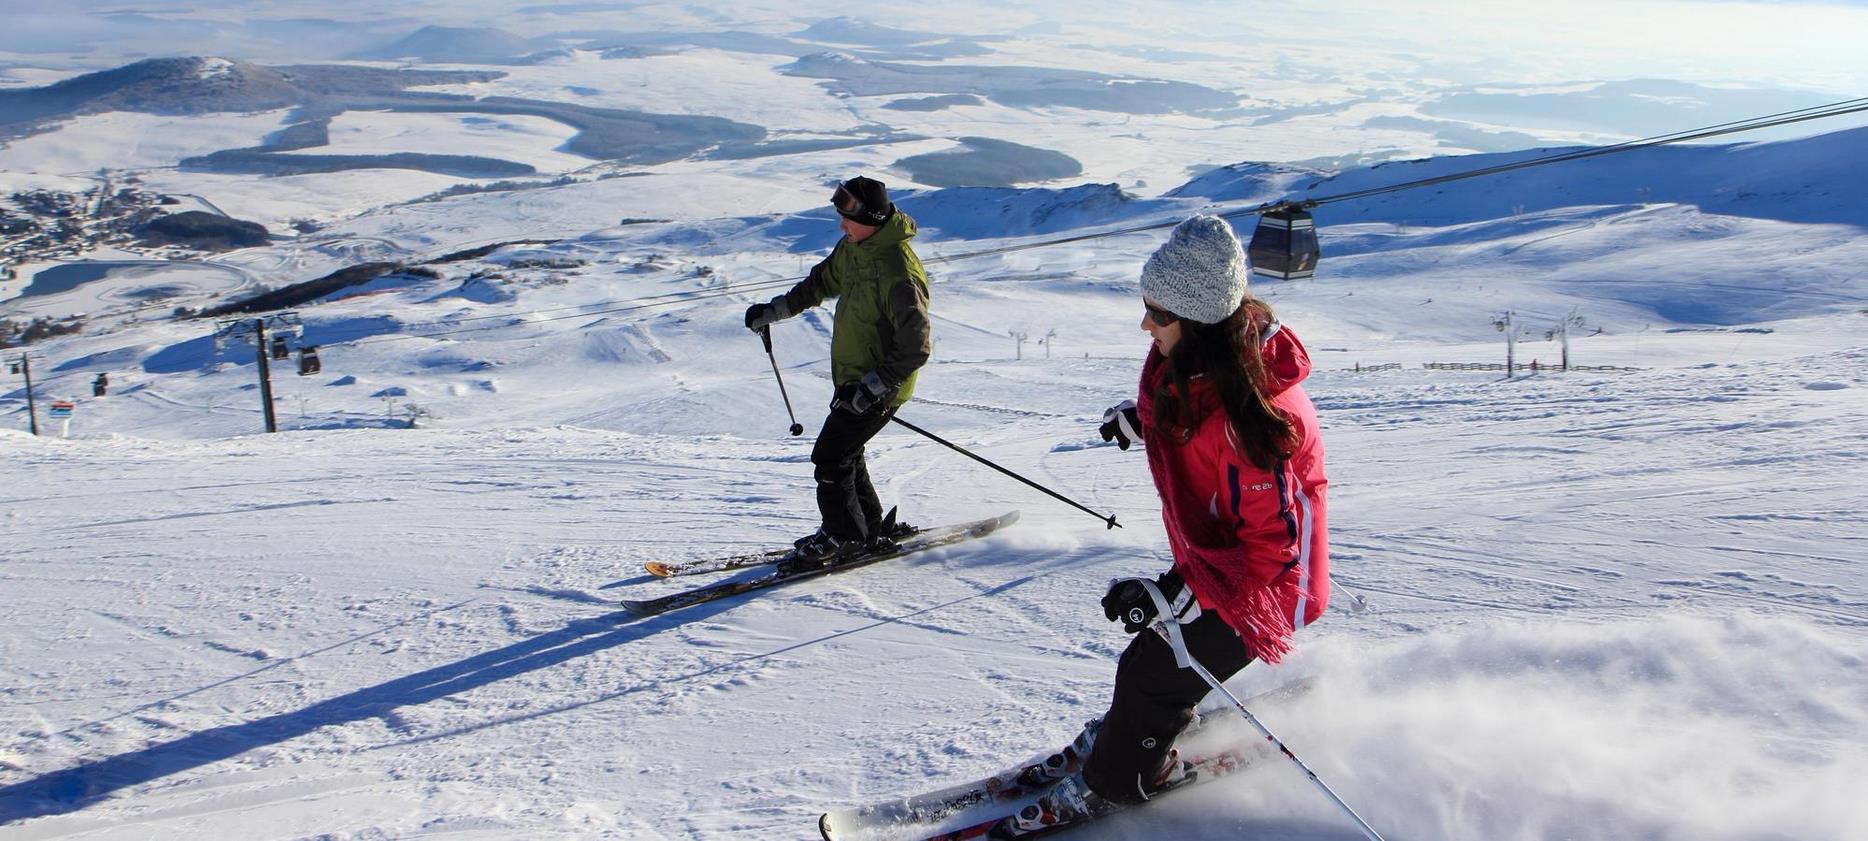 Super Besse - alpine skiing on the slopes of Super Besse